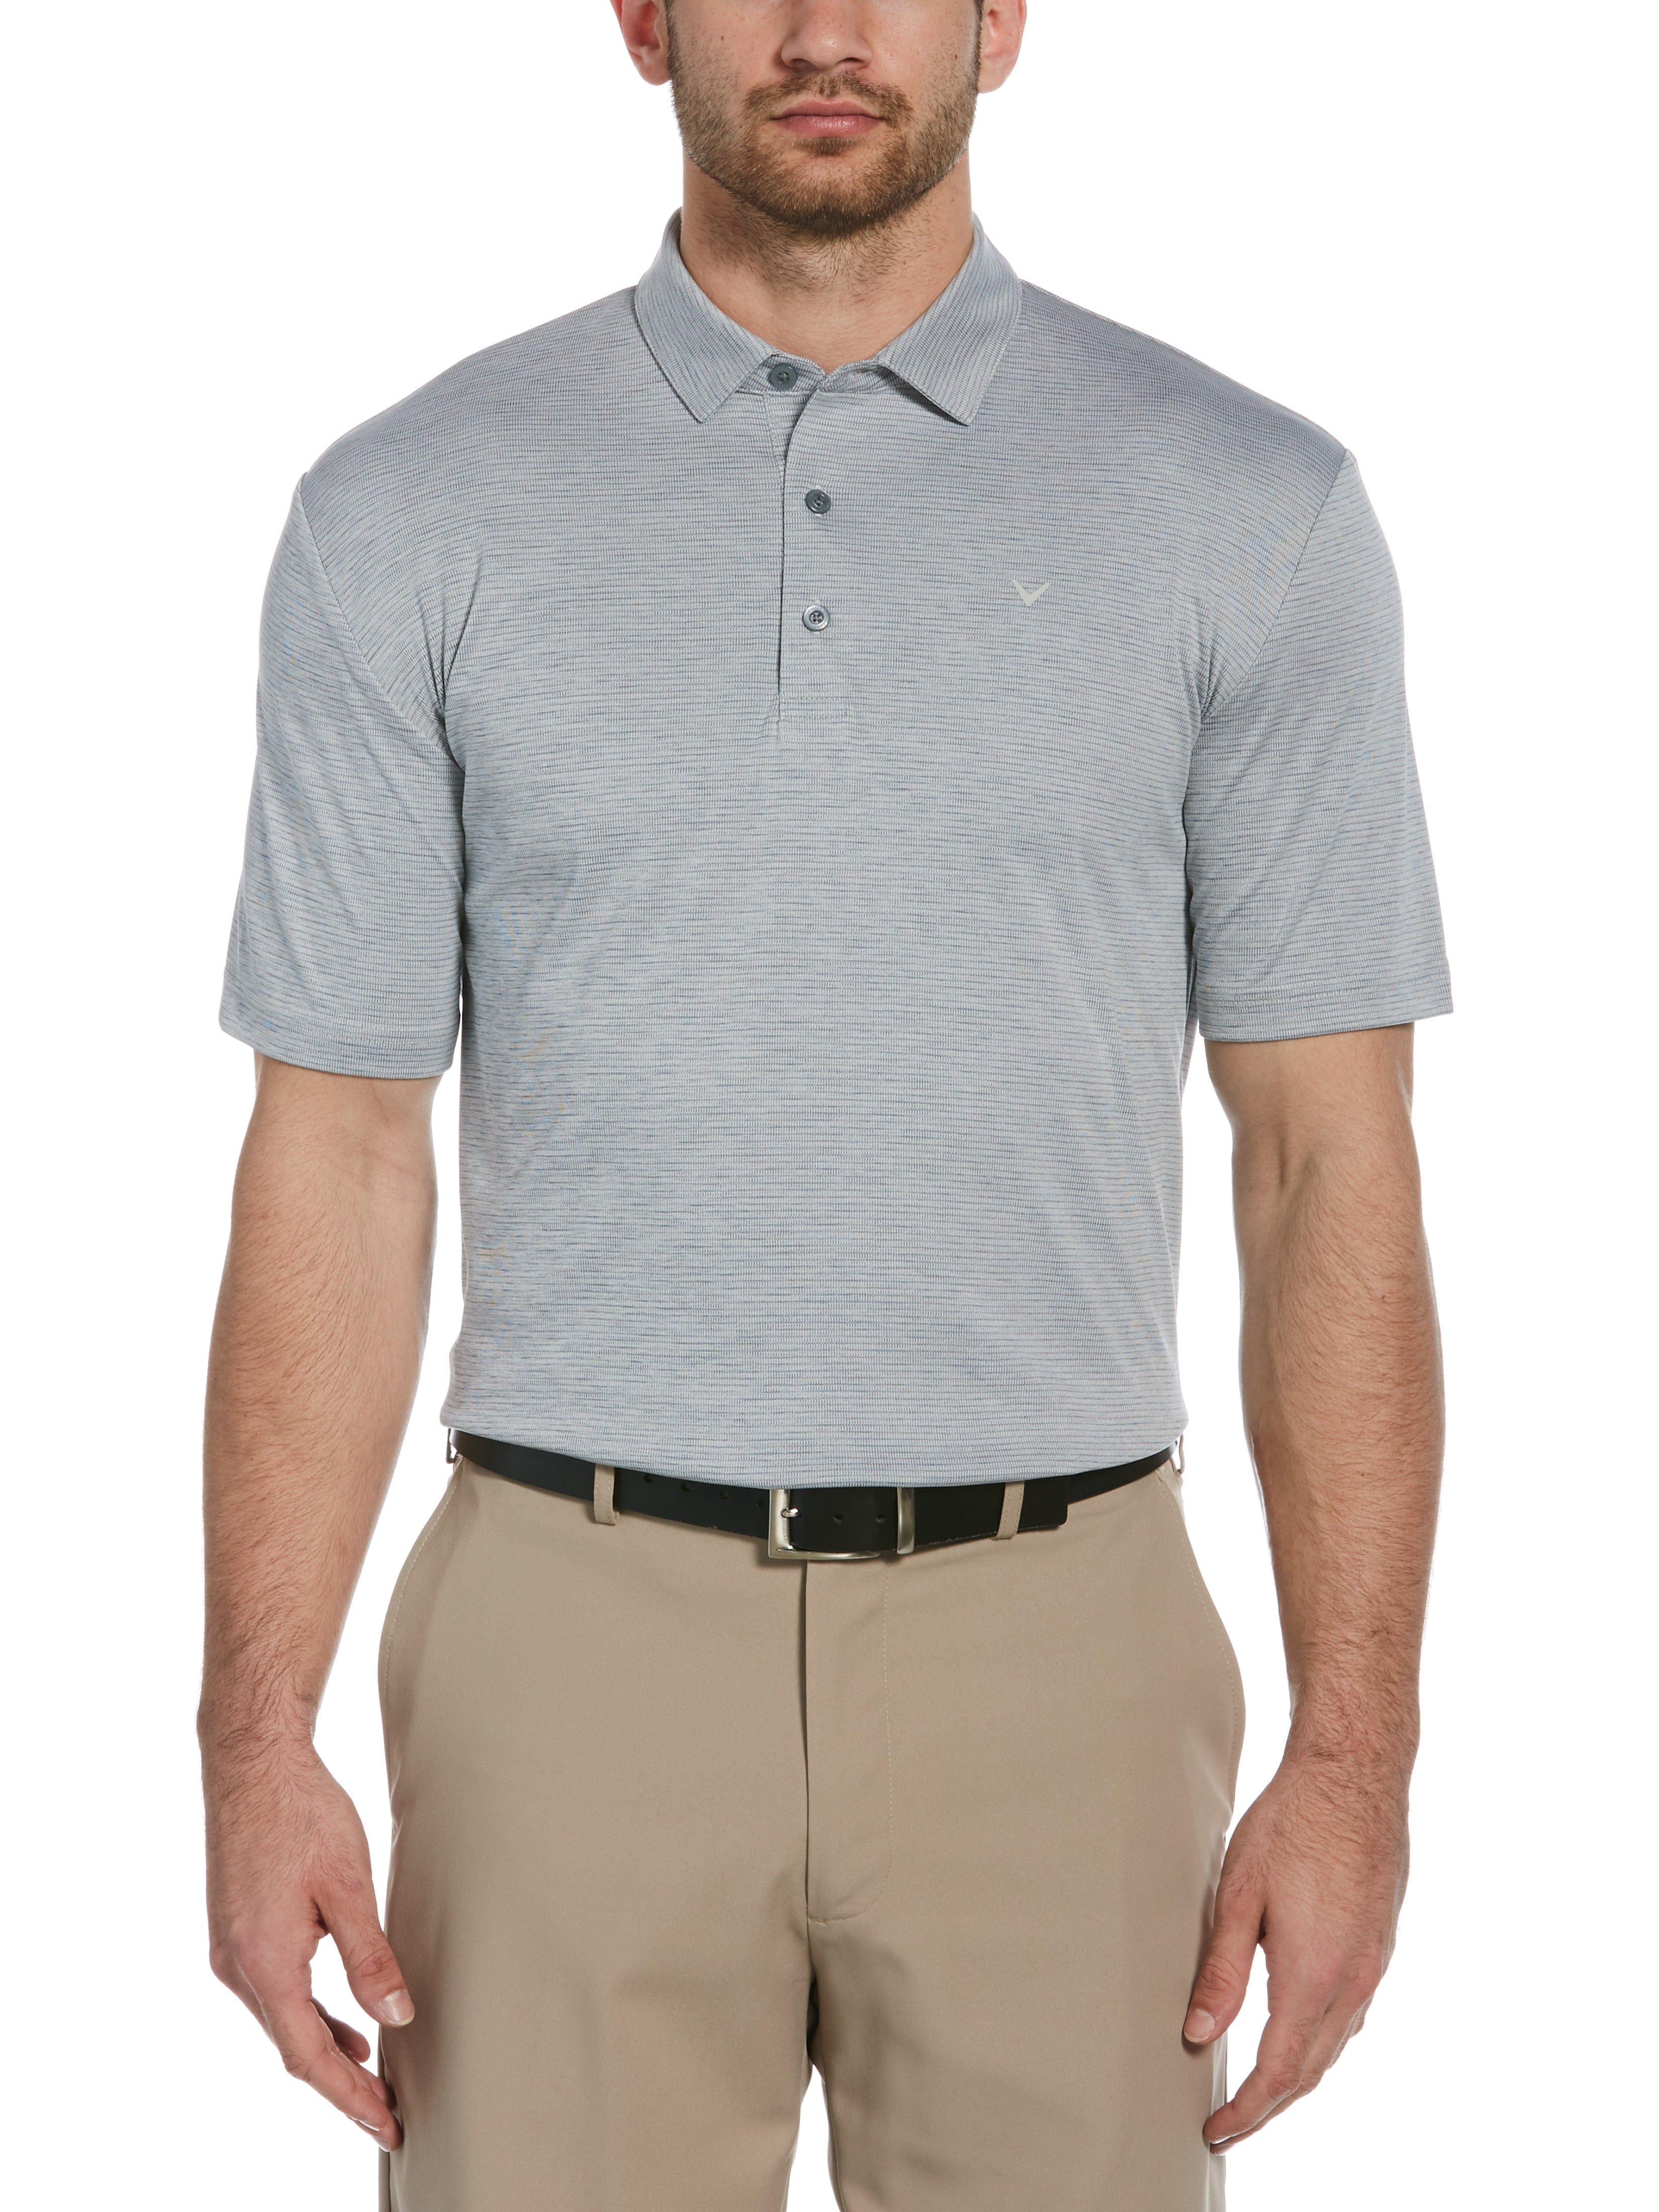 Callaway Apparel Mens Solid Texture Golf Polo Shirt, Size 2XL, Tradewinds Heather Gray, 100% Polyester | Golf Apparel Shop